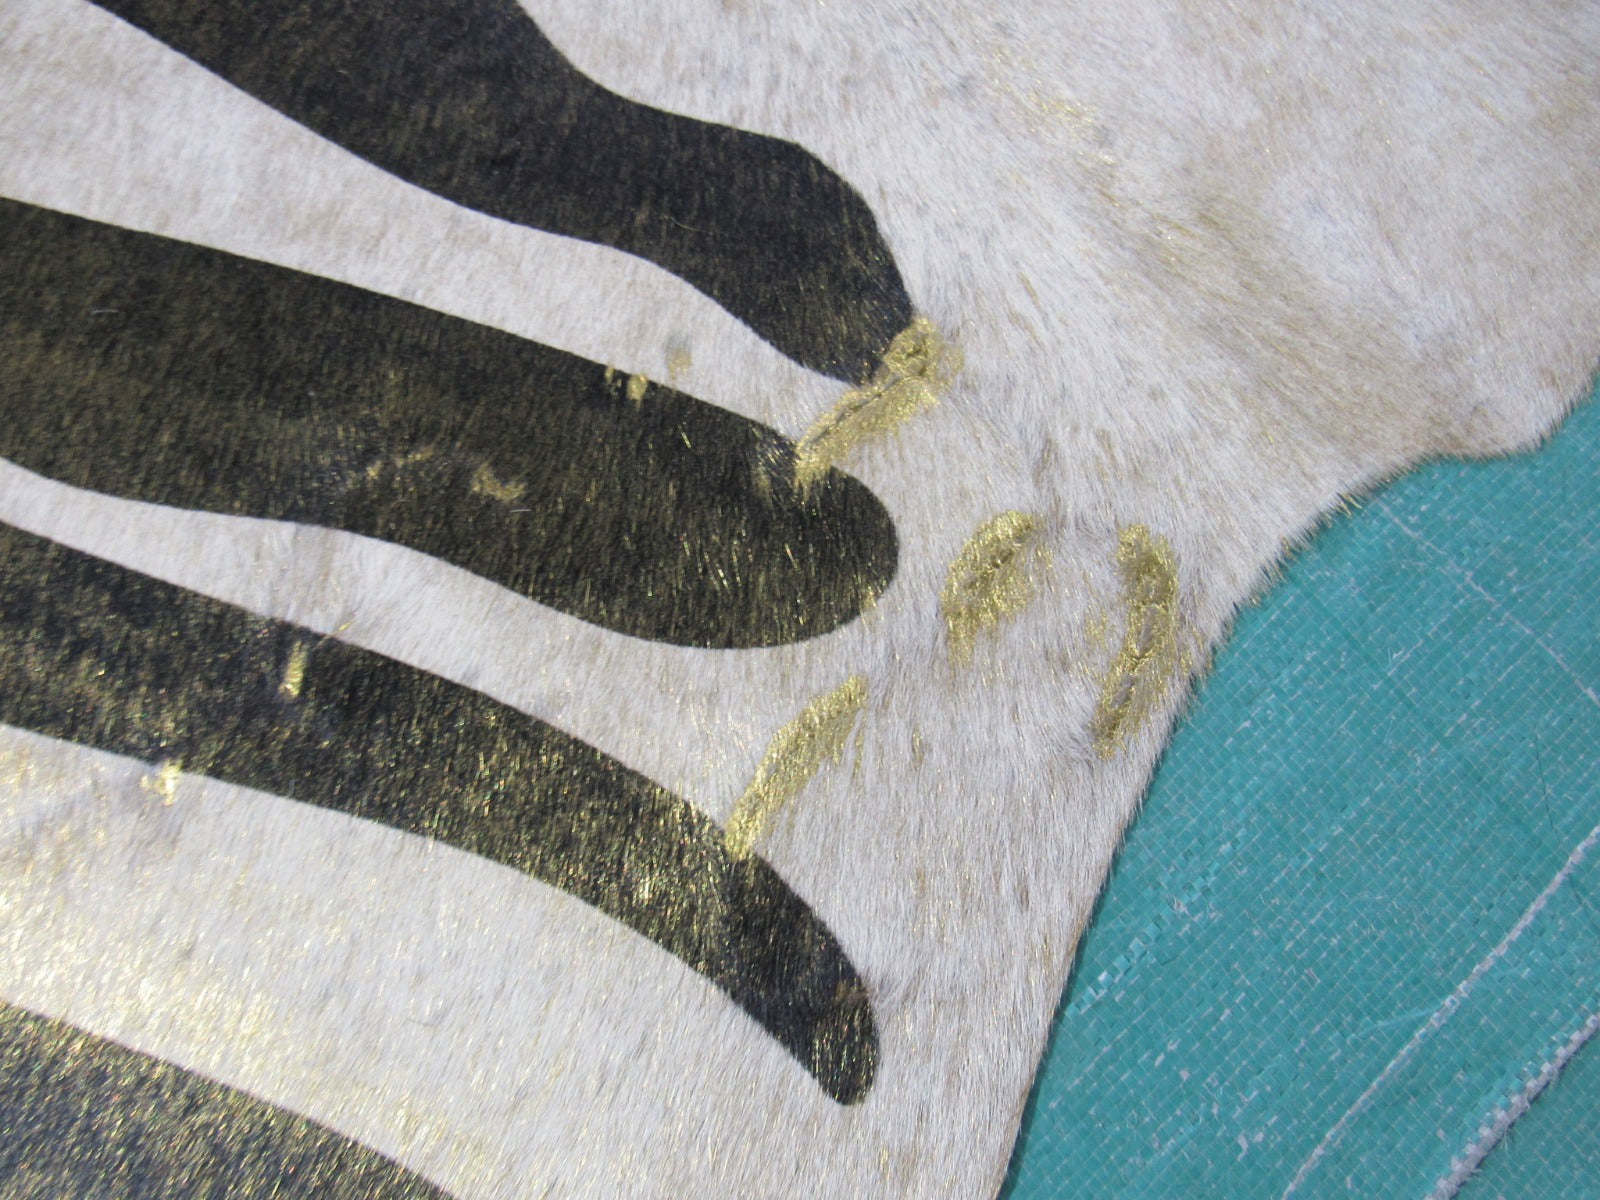 Zebra Cowhide Rug with Gold Metallic (not acid washed, just metallic glitter) - Size: 6.5x6 feet M-1298